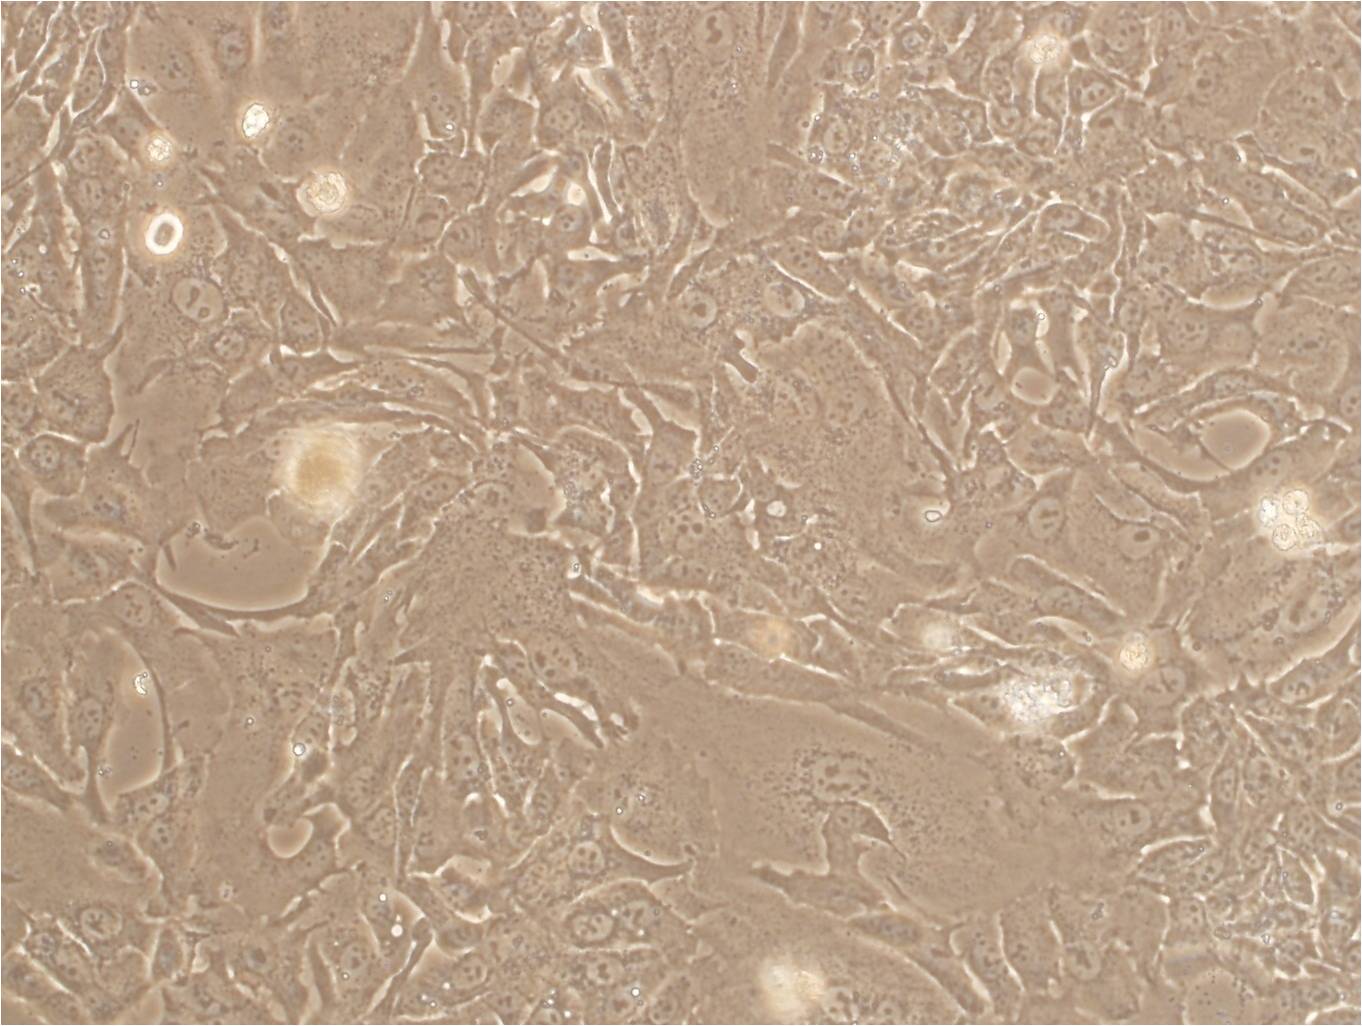 SW982 Cells|人滑膜肉瘤可传代细胞系,SW982 Cells